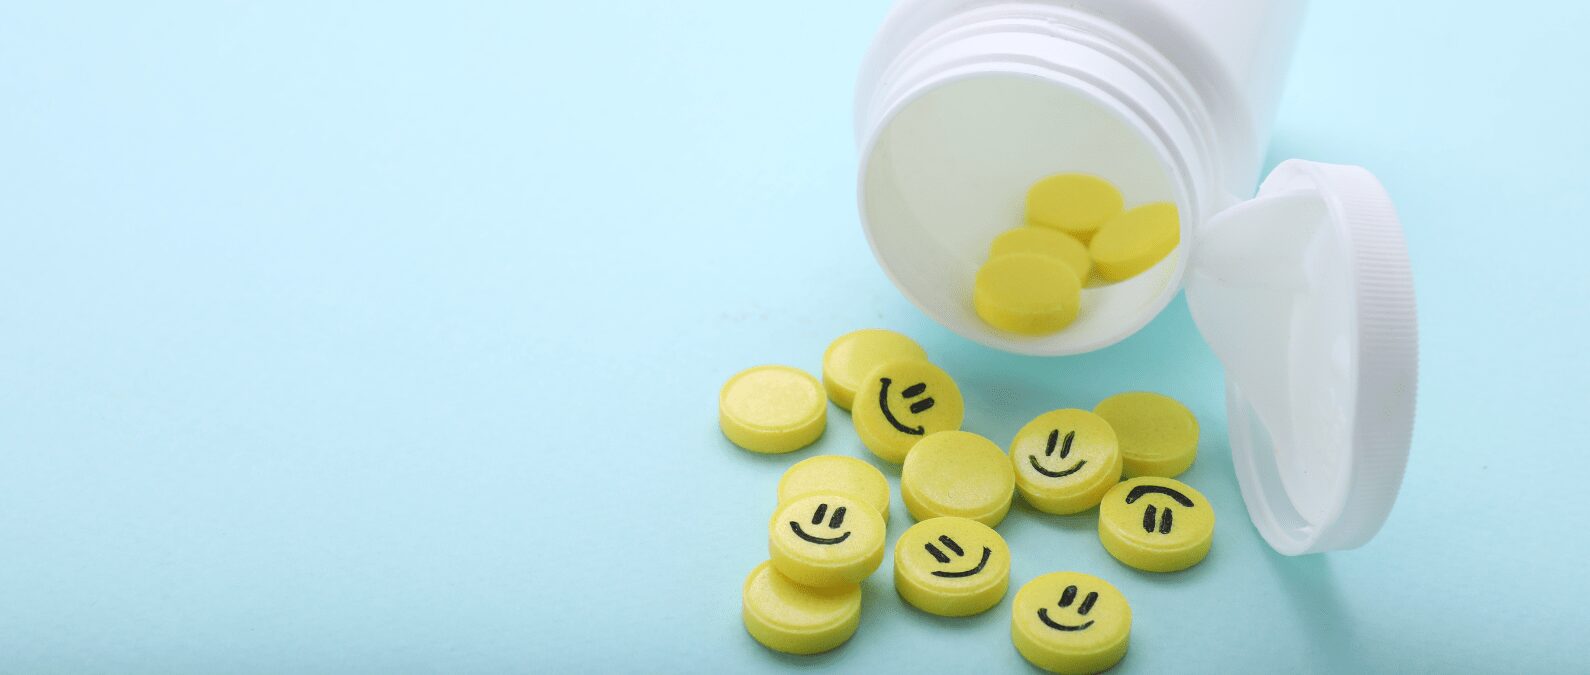 médicaments antidépresseurs